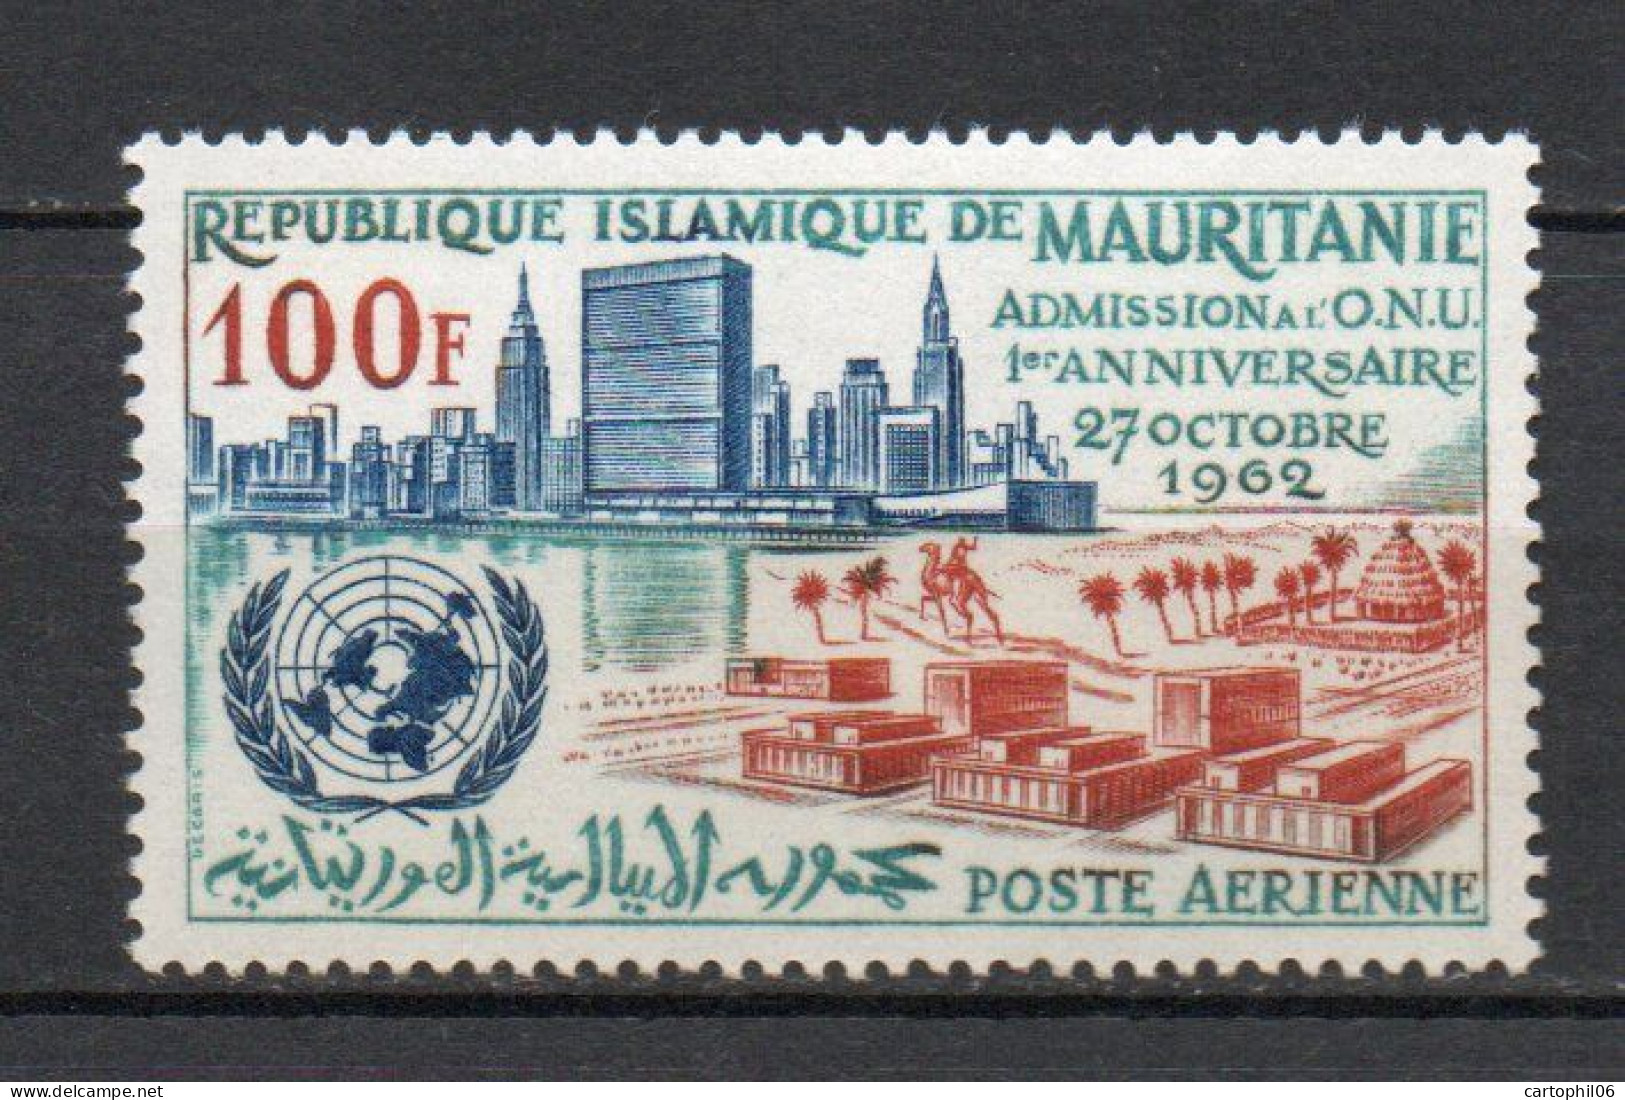 - MAURITANIE Poste Aérienne N° 22 Neuf ** MNH - 100 F. ADMISSION AUX NATIONS UNIES 1962 - - Mauritania (1960-...)